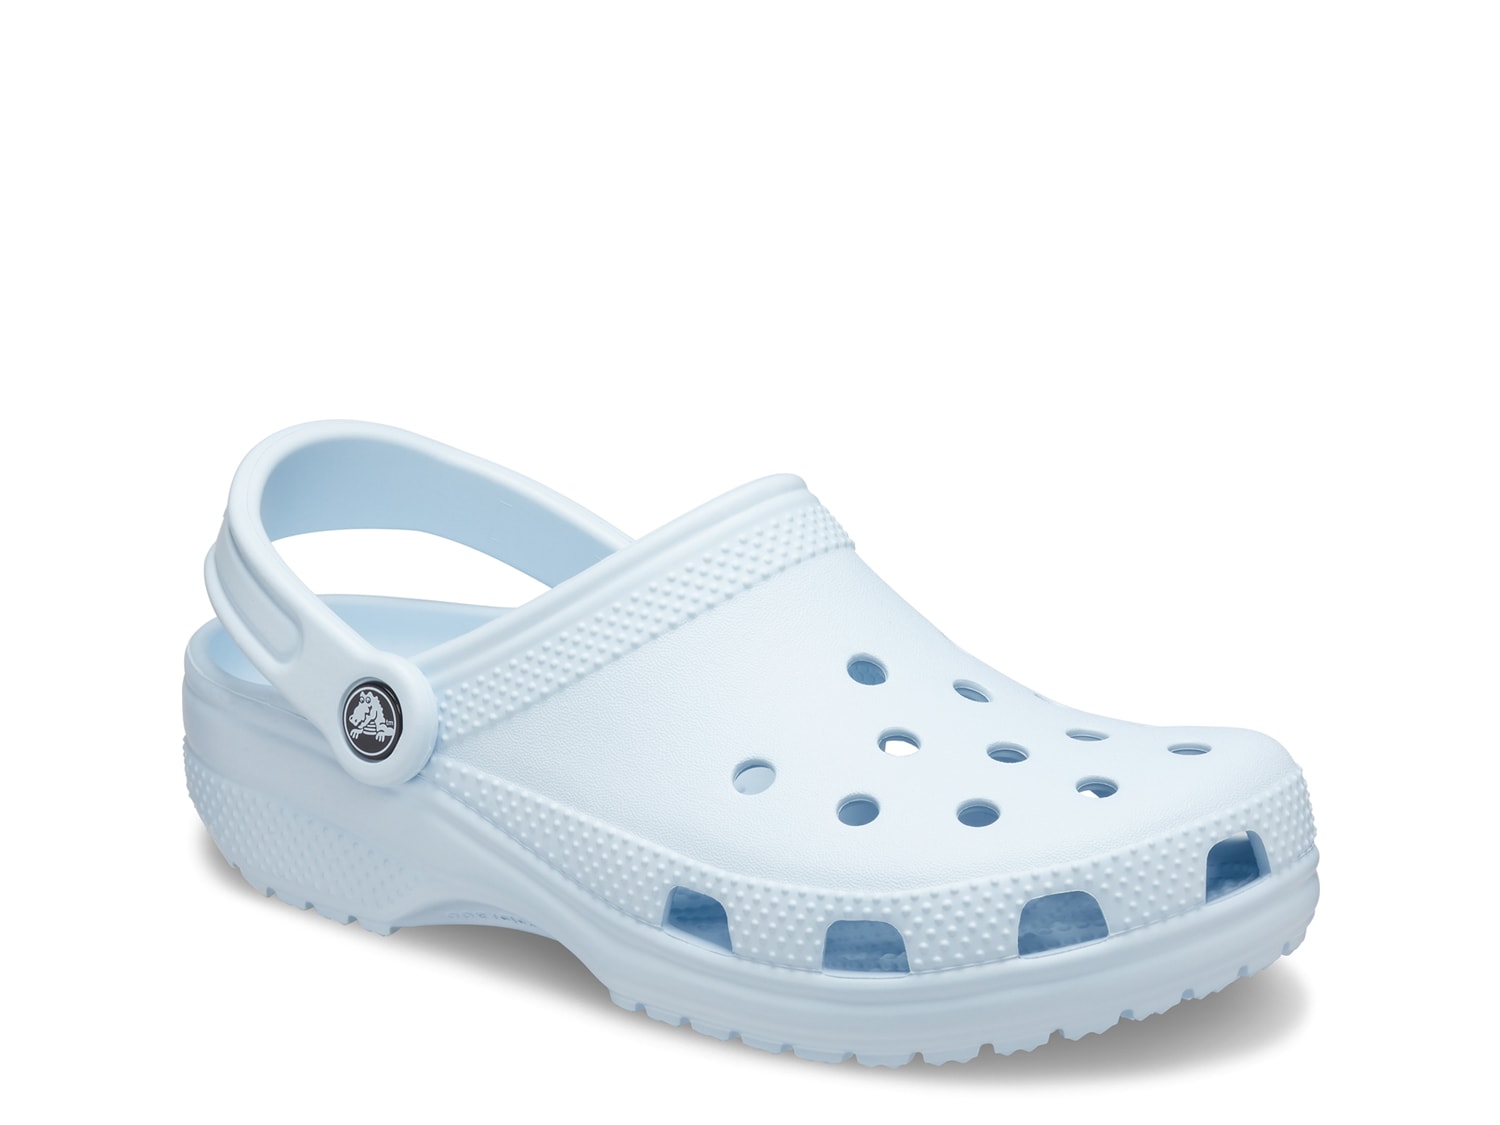 dsw crocs sandals